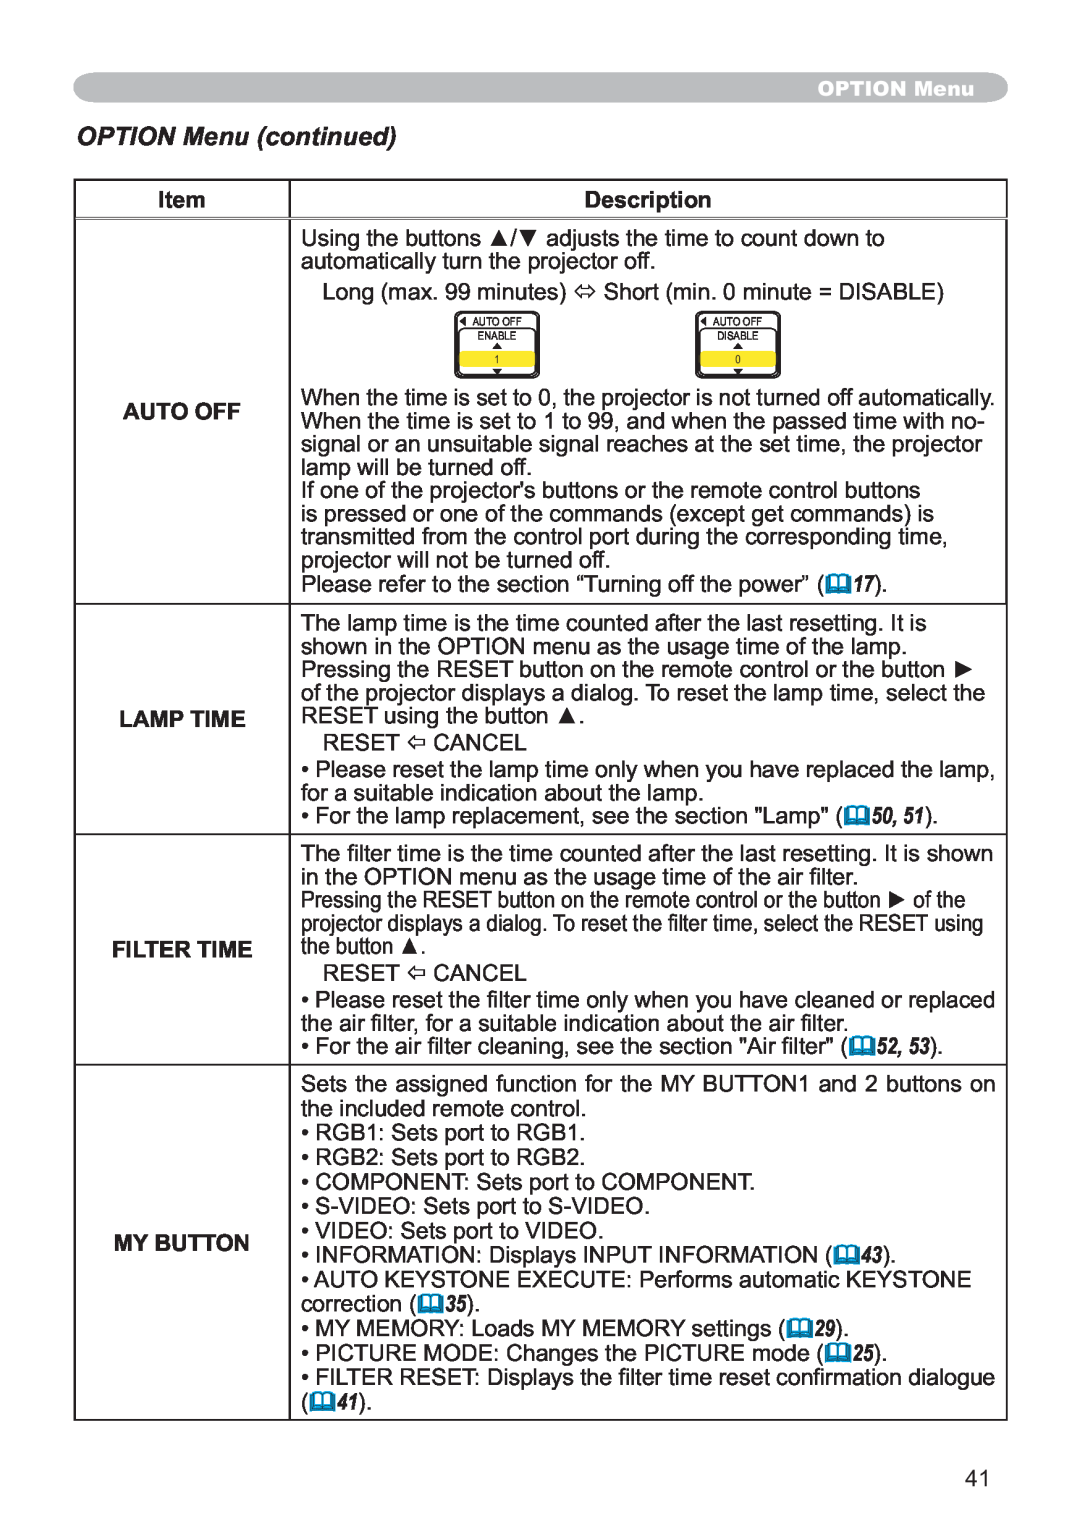 Hitachi ED-X12 user manual OPTION Menu continued, Item, Description, Auto Off, Lamp Time, Filter Time, My Button 